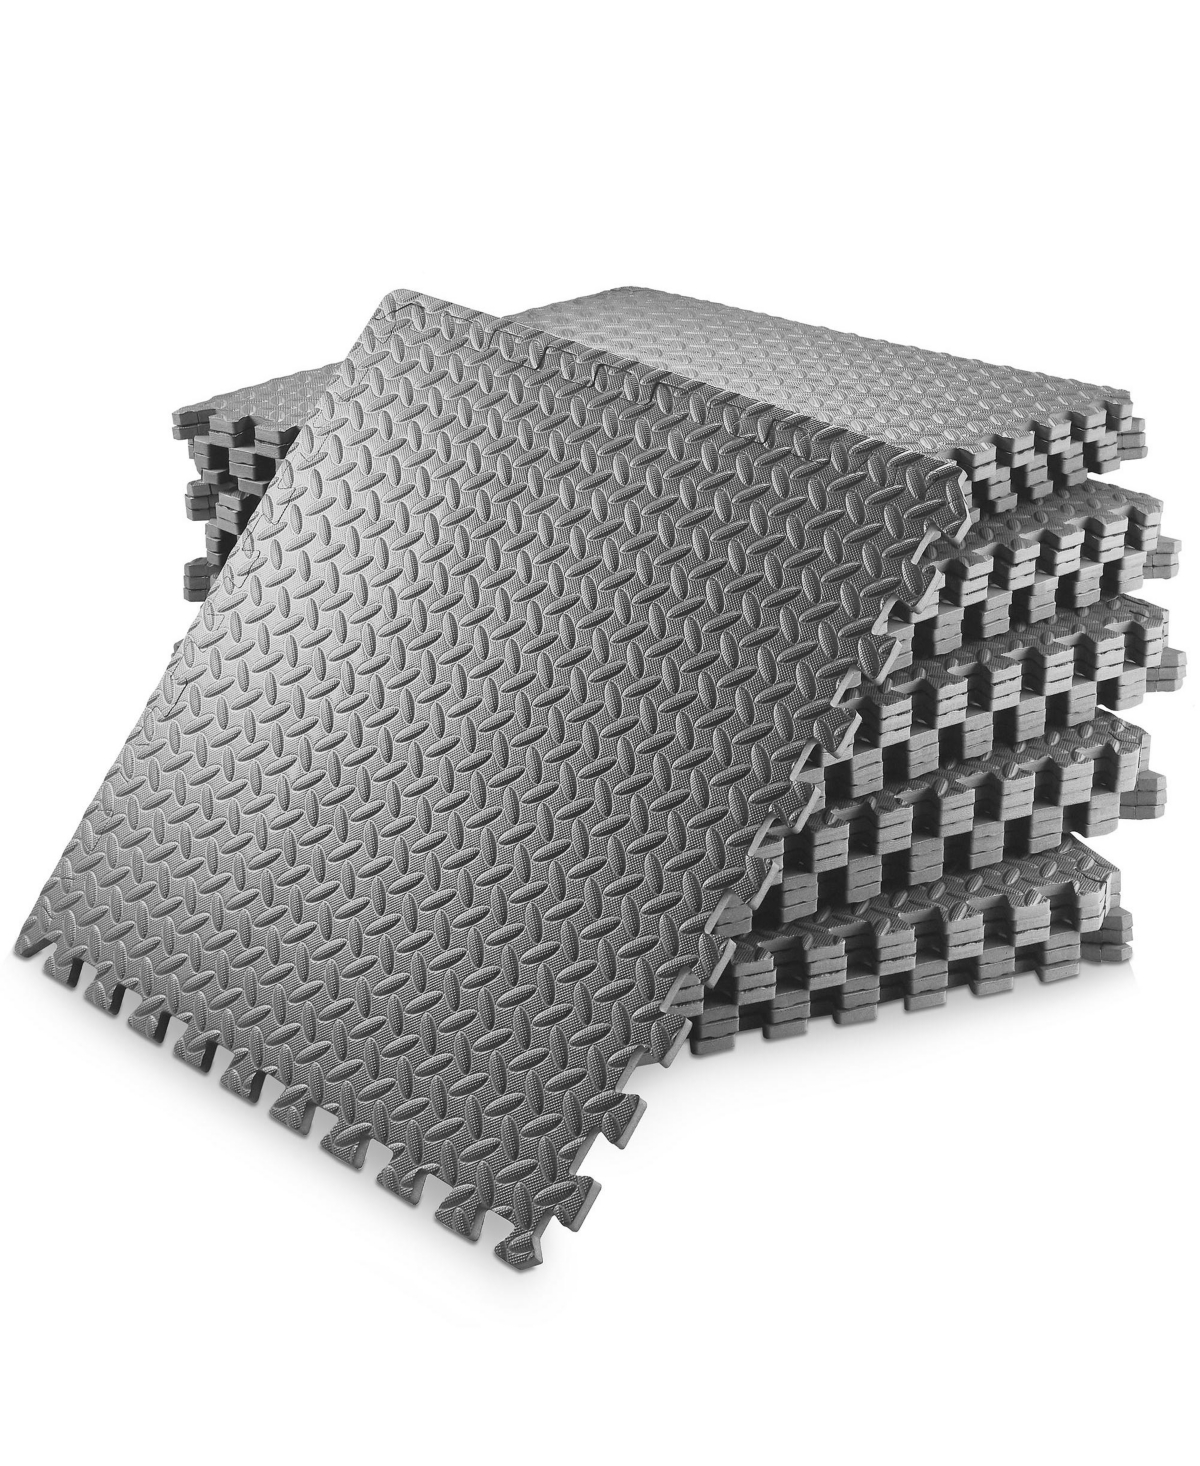 Pack of 30 Exercise Flooring Mats - 24 x 24 Inch Foam Rubber Interlocking Puzzle Floor Tiles - Gray - Grey